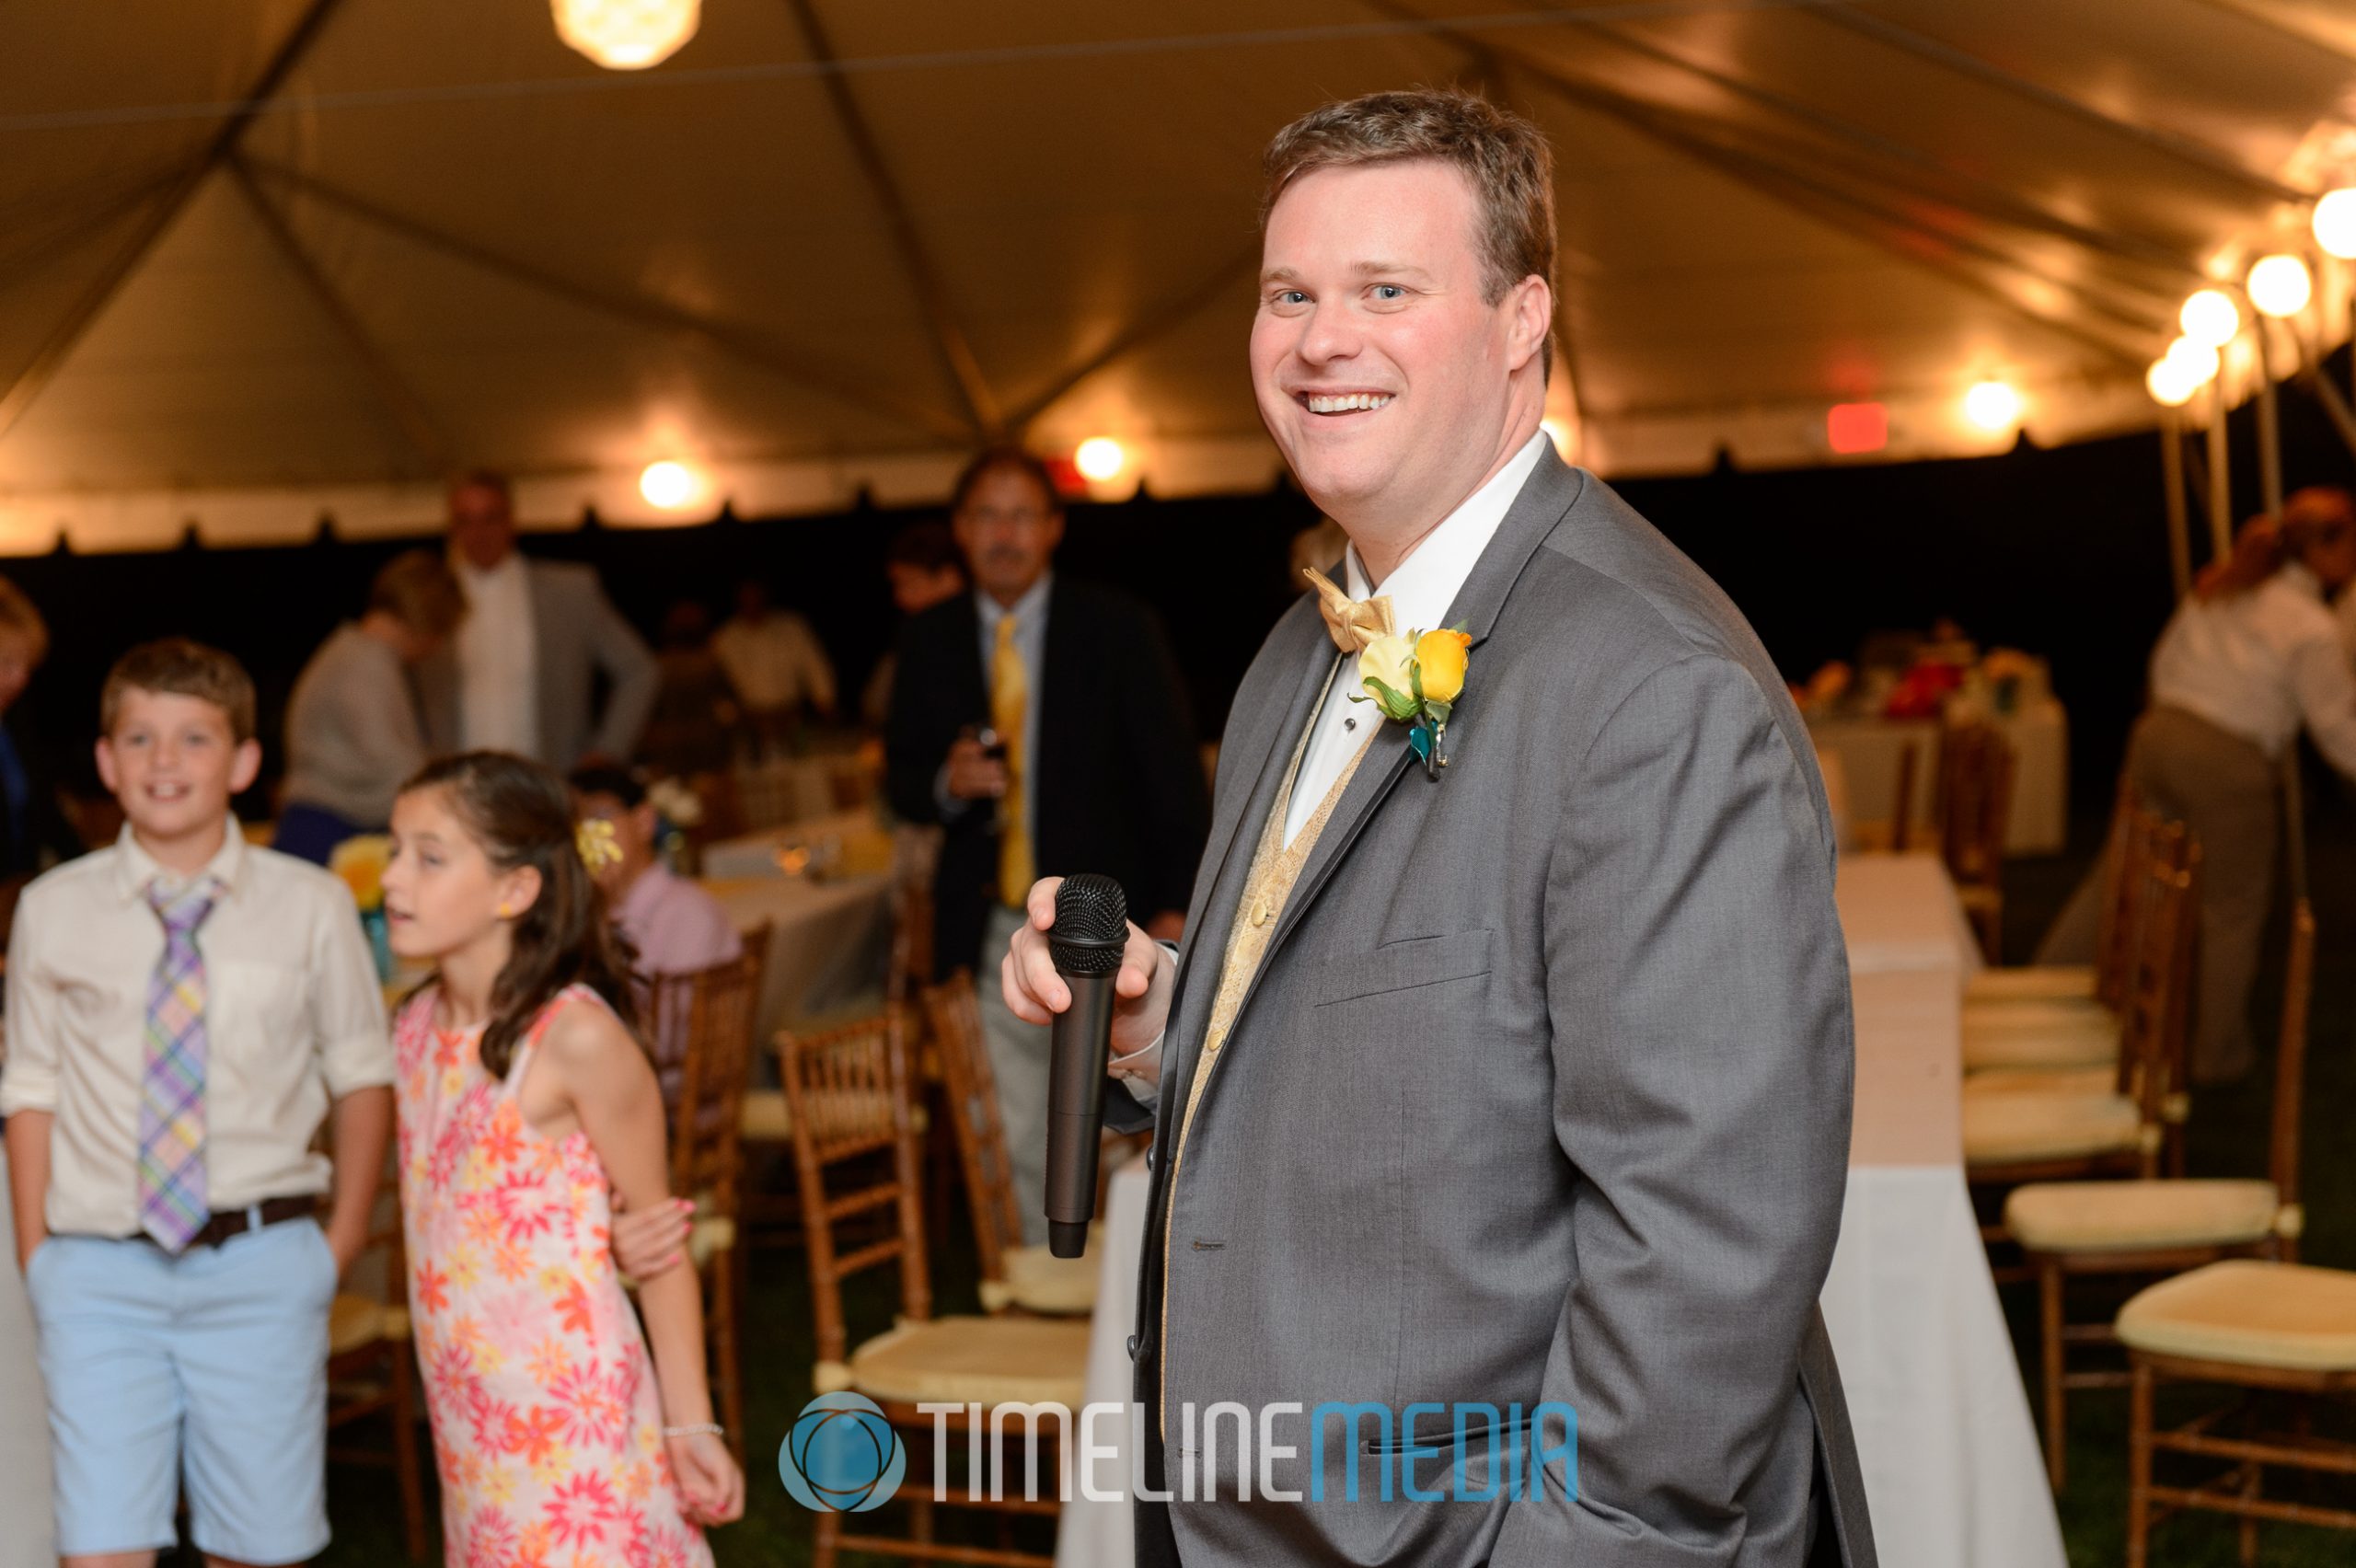 Groom at wedding reception ©TimeLine Media